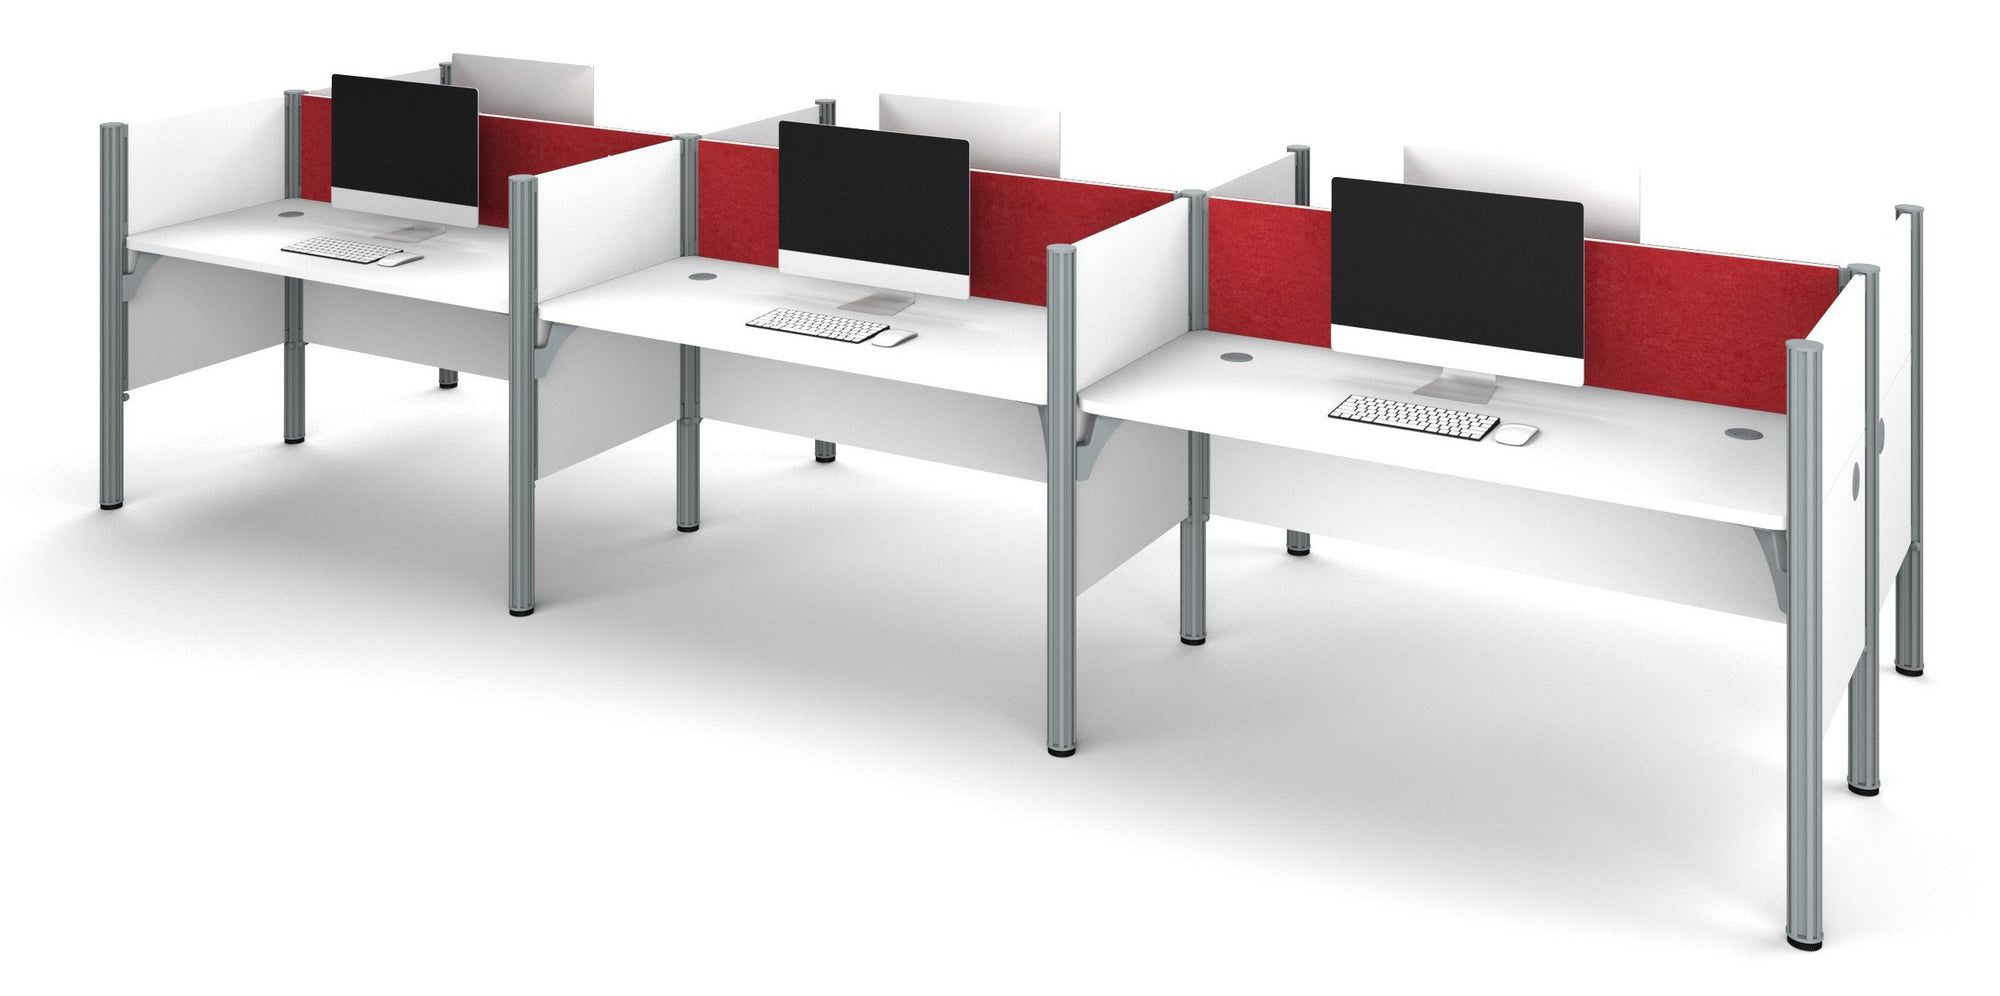 182 White Six Desk Workstation W Red Tack Board By Bestar